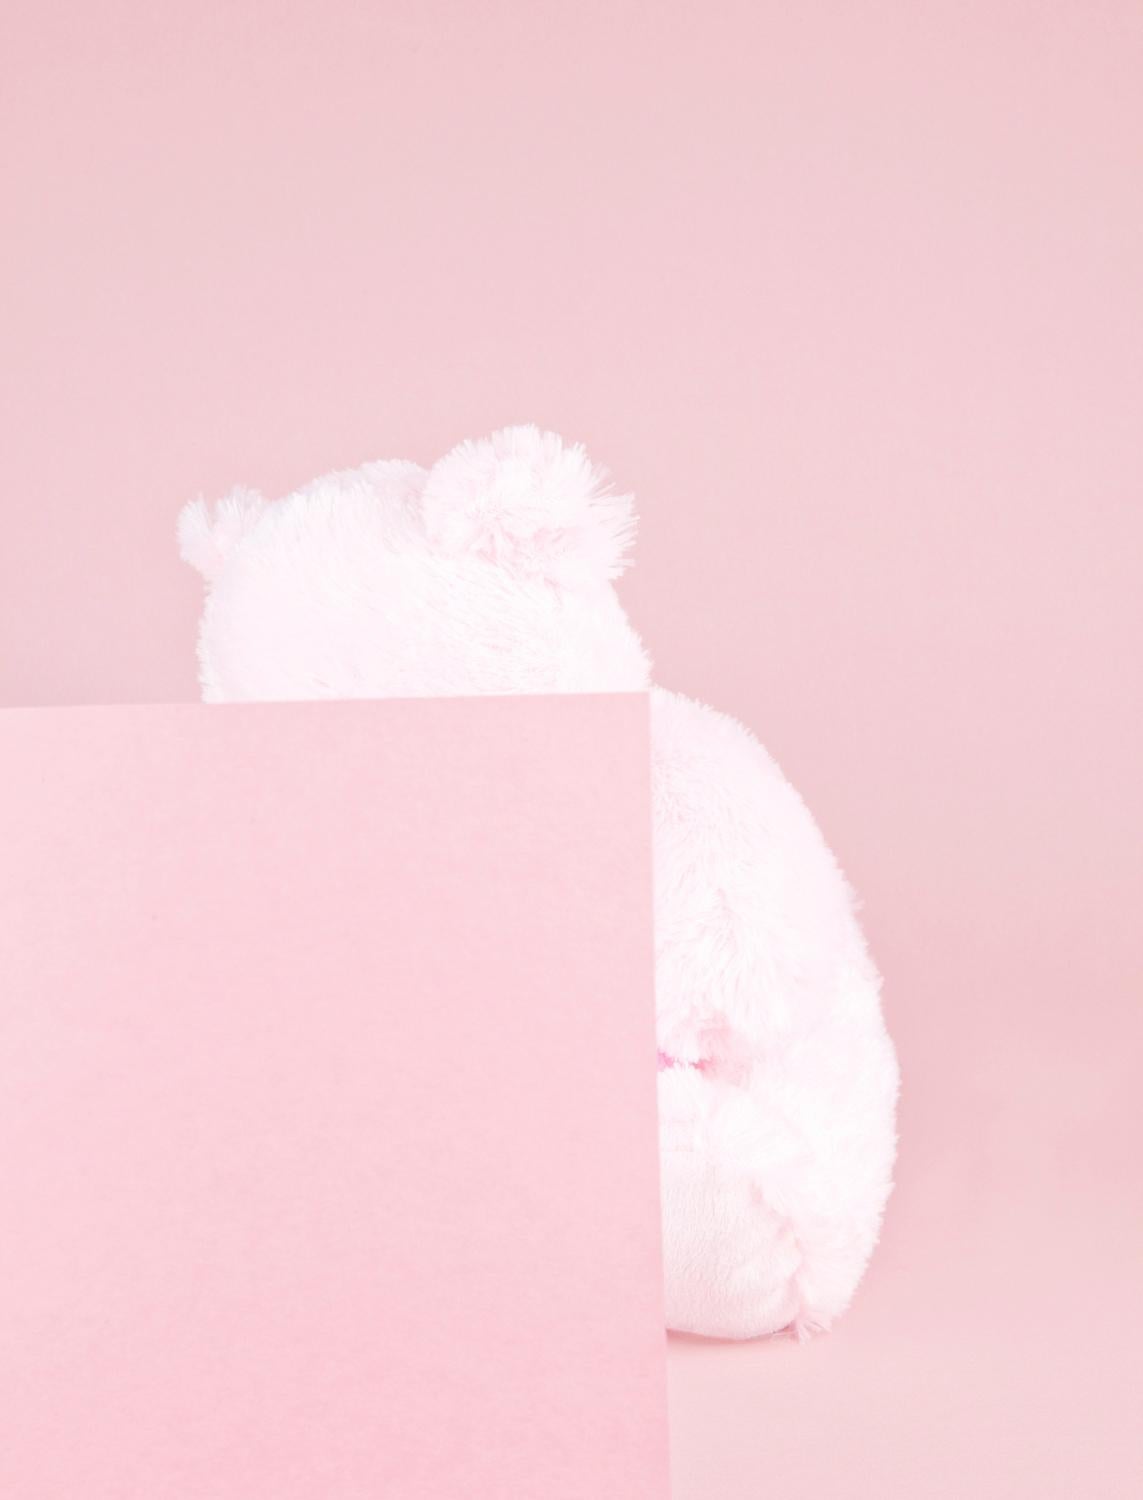 pnkbr – Ina Jang, Abstract, Minimalistic, Object, Art, Still Life, Teddy, Pink